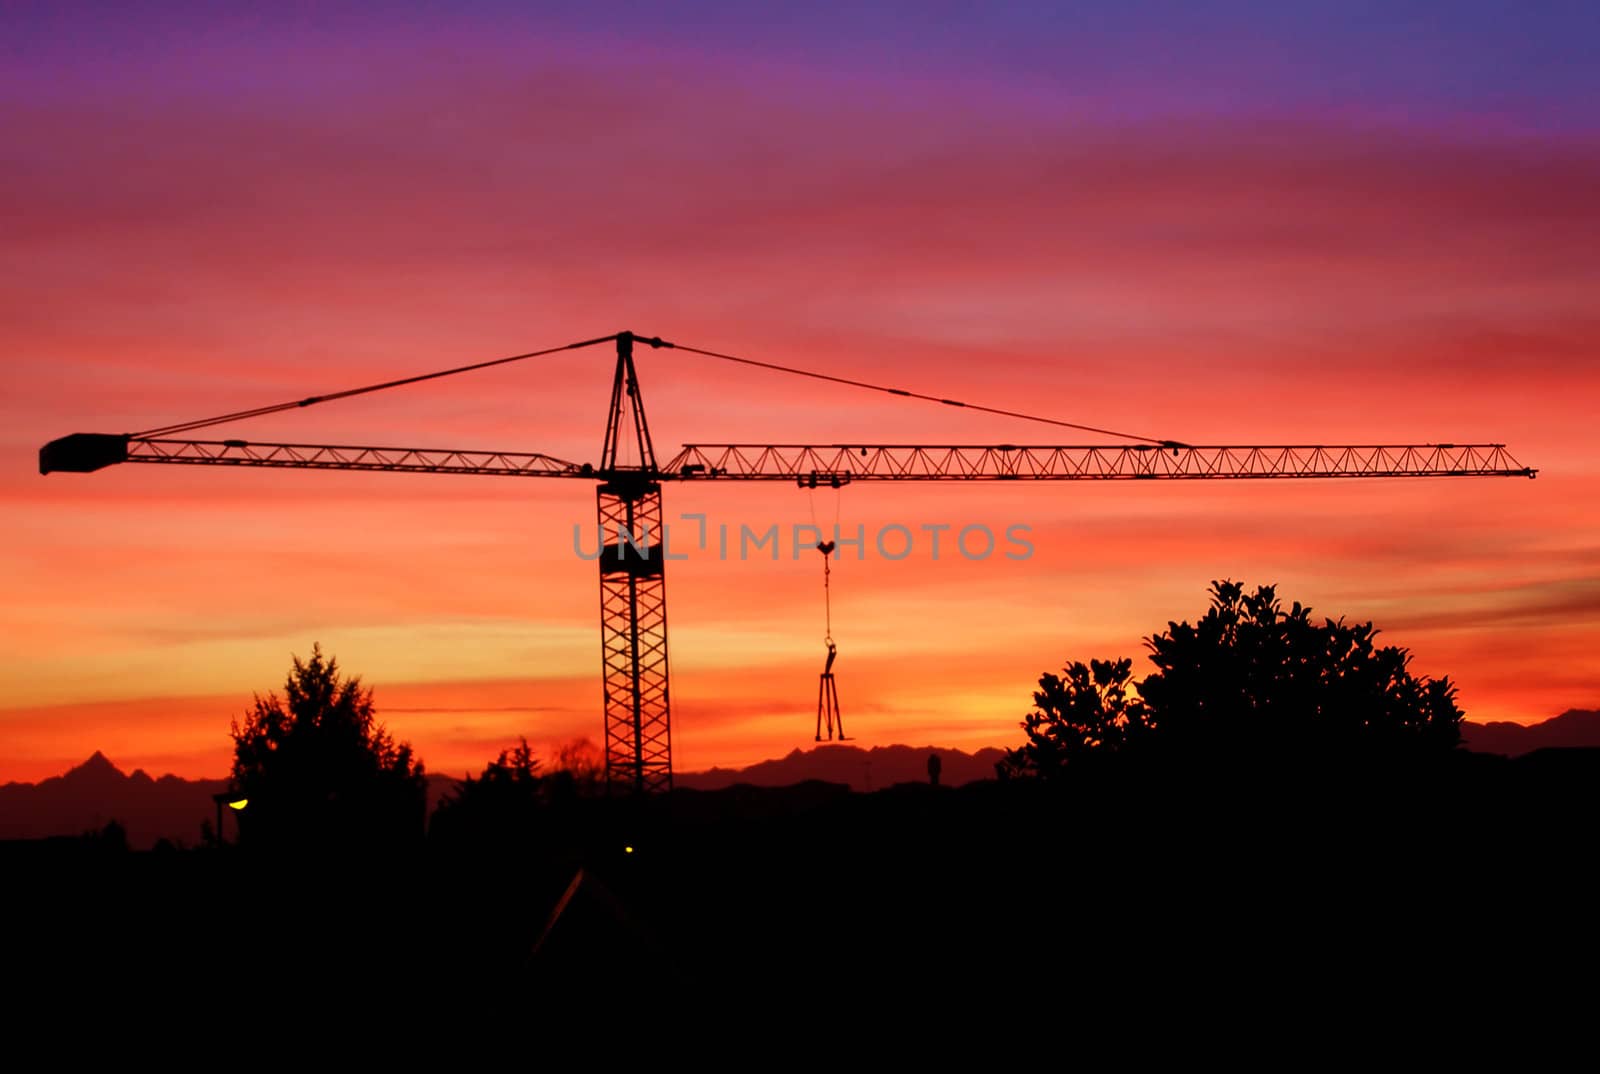 Tower construction crane